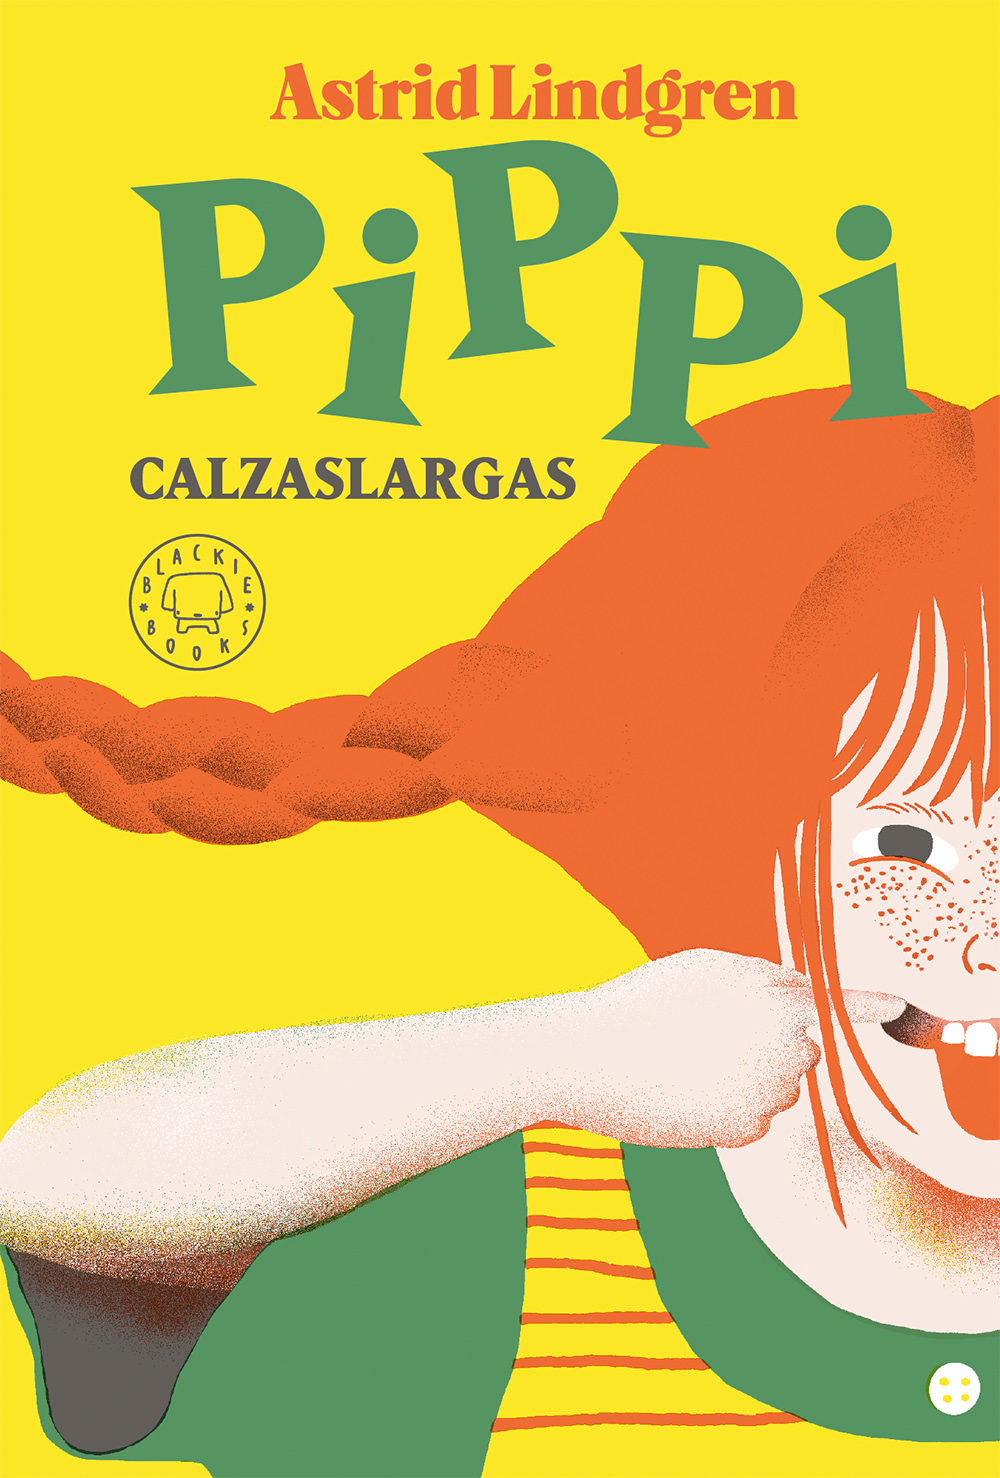 Heaven in books: Reseña: Pippi Calzaslargas - Astrid Lindgren